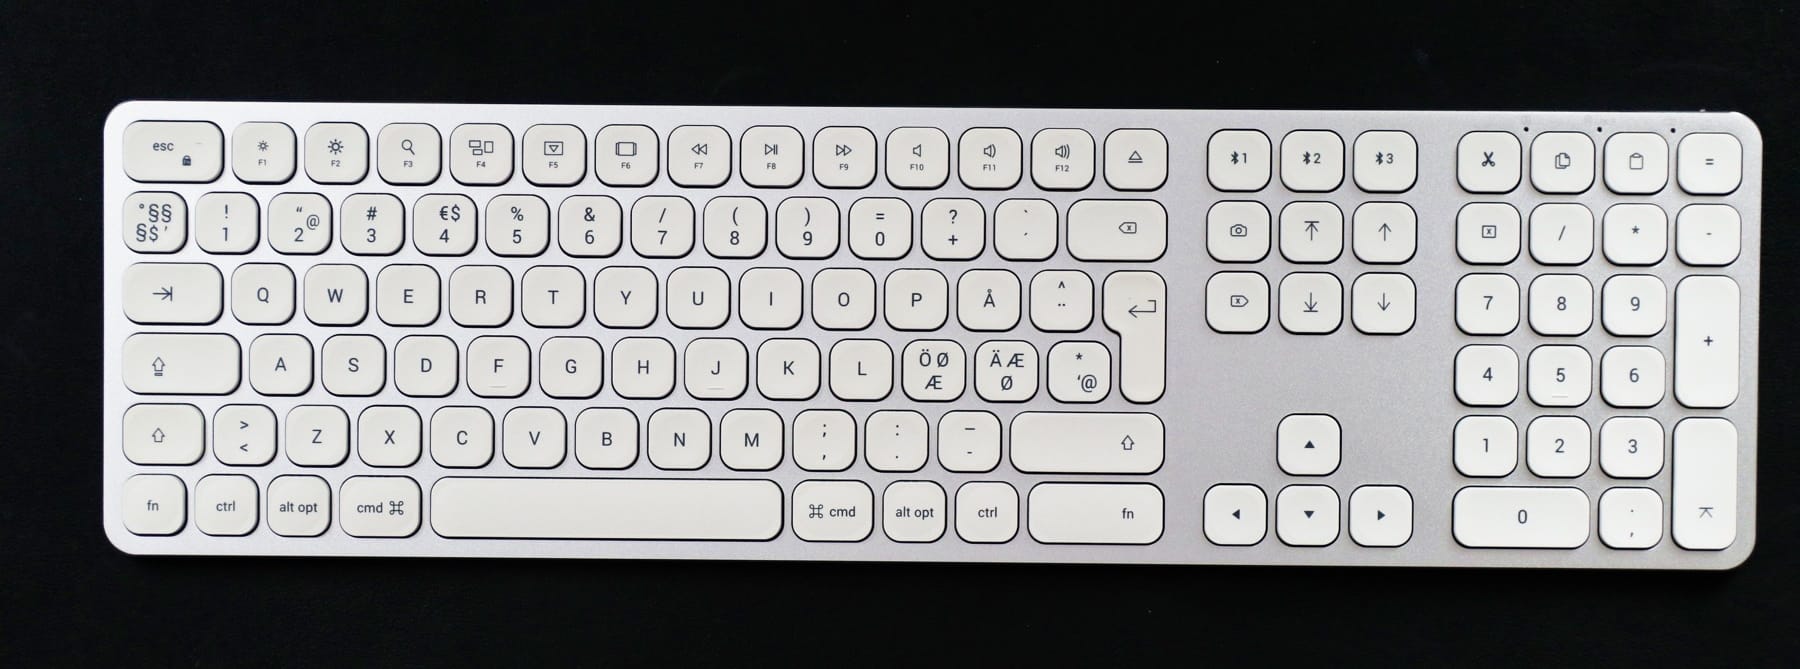 best mac keyboards: satechi